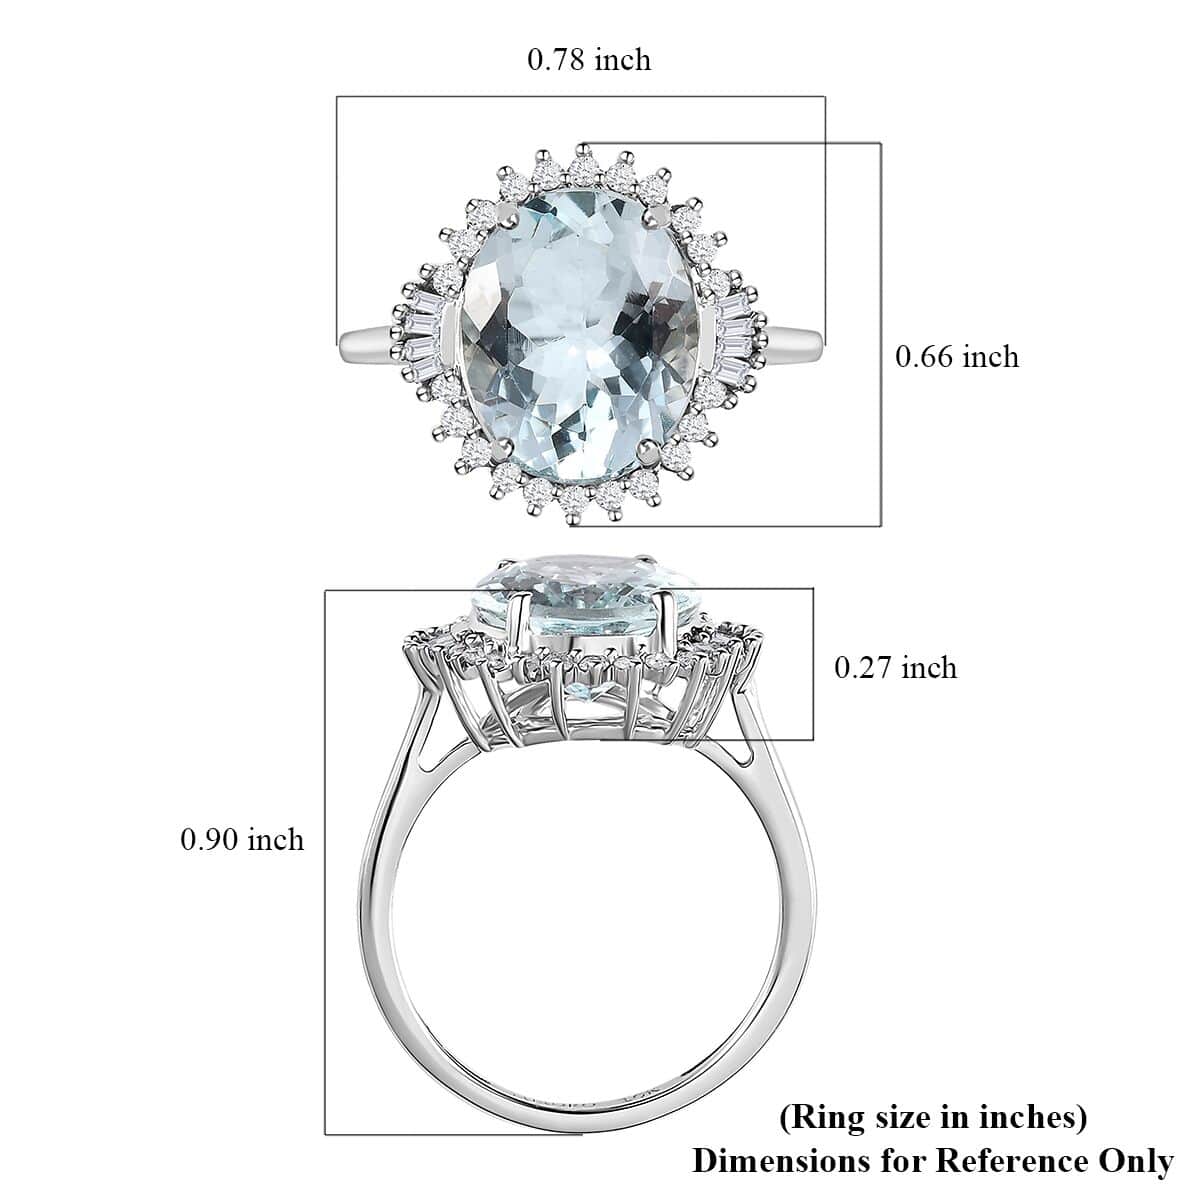 Luxoro 10K White Gold Premium Mangoro Aquamarine, Diamond (0.30 cts) Halo Ring (Size 10.0) 4.40 ctw image number 5